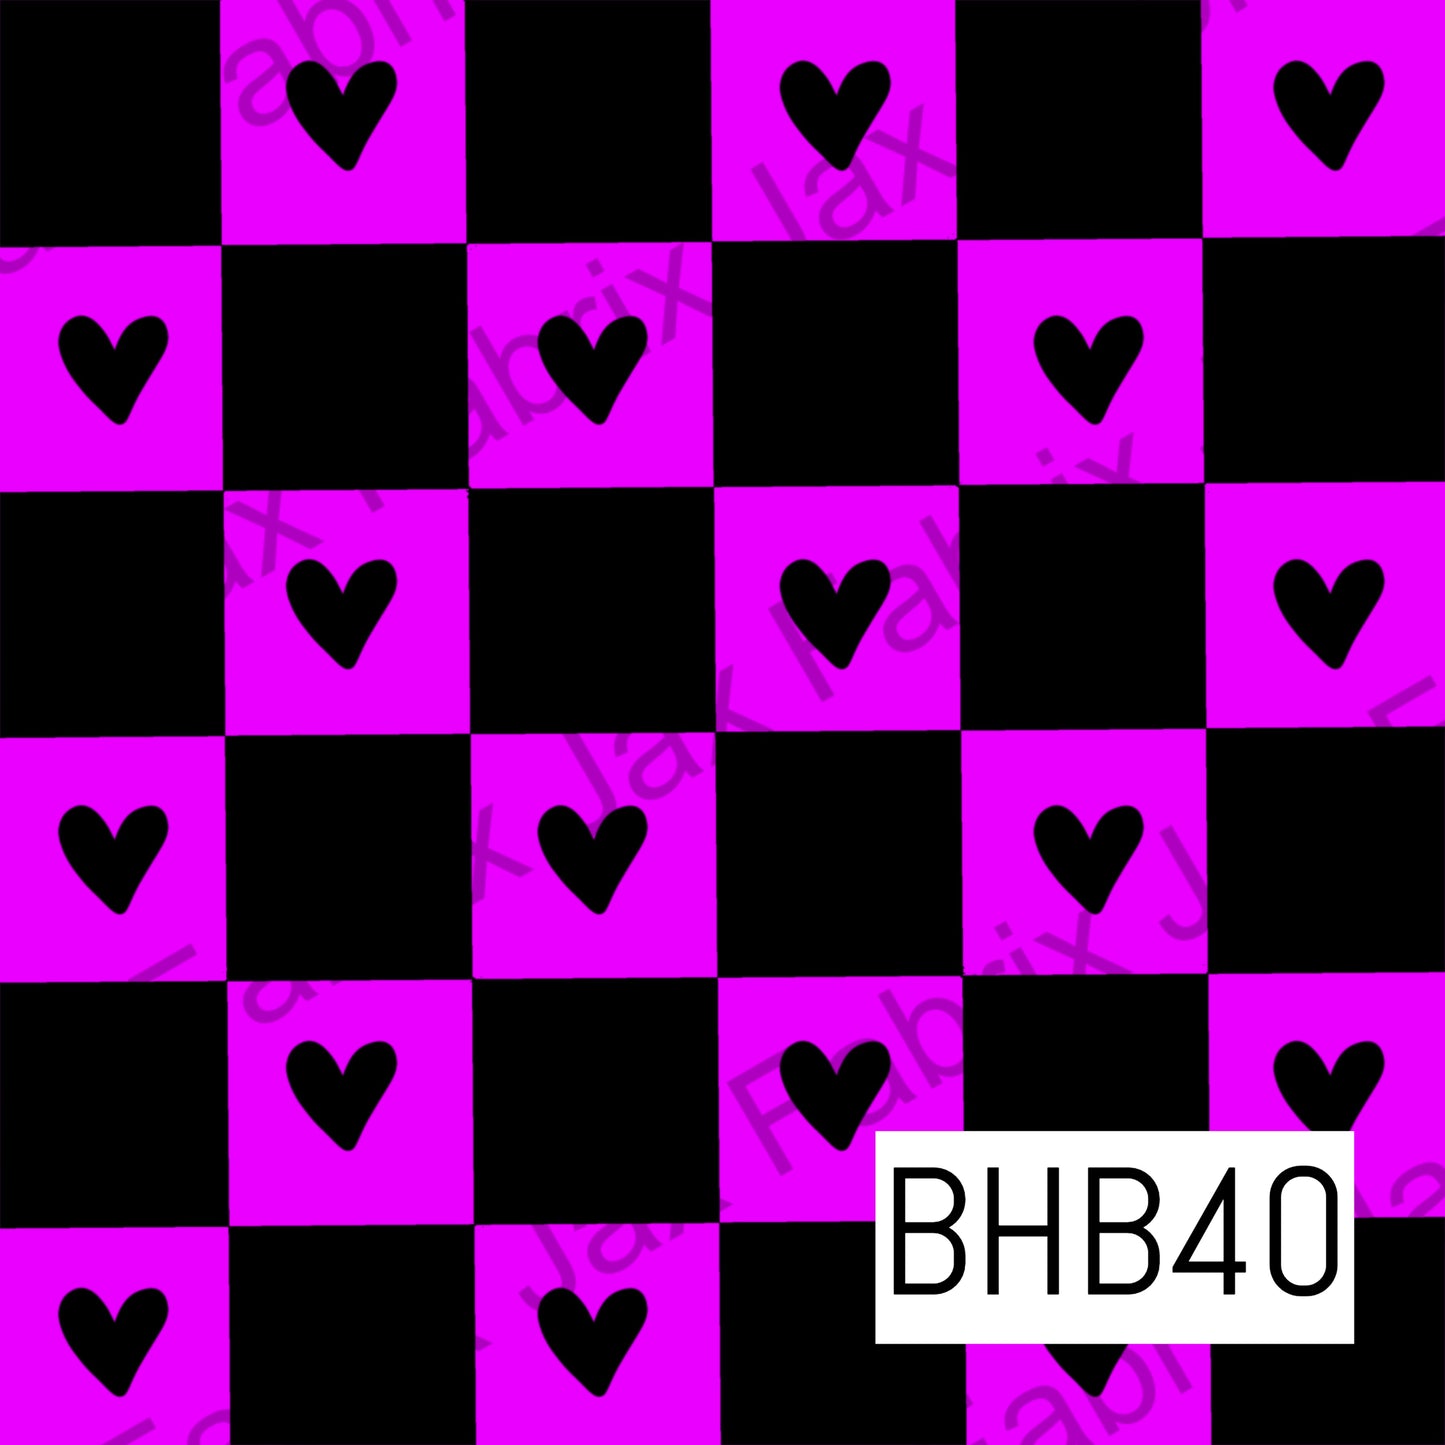 Heart Check BHB40